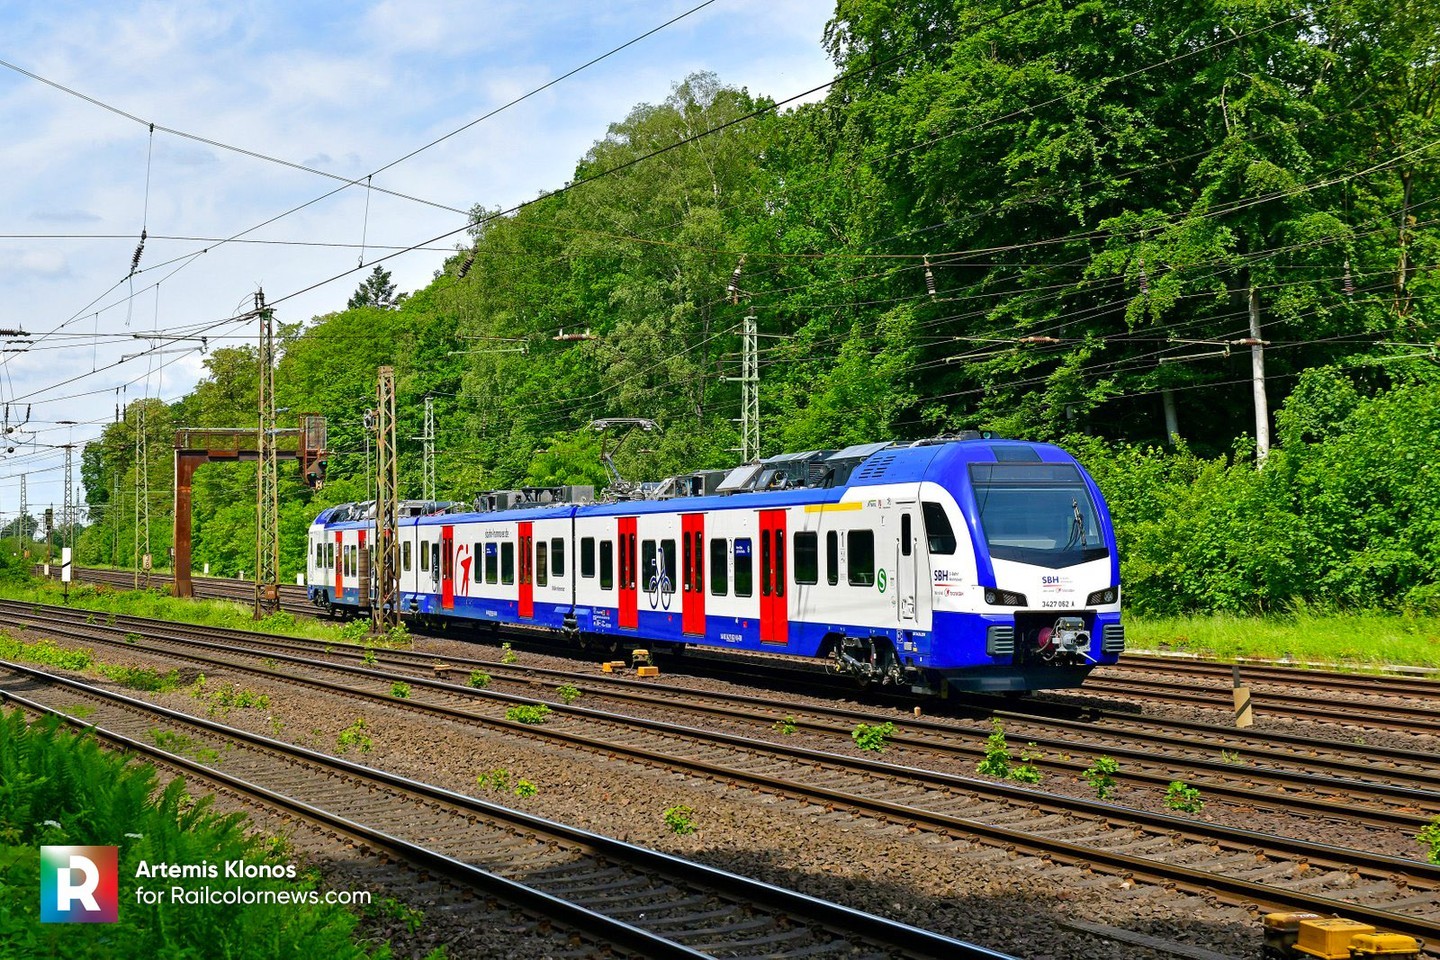 📷 by Artemis Klonos 🇩🇪 Transdev now sole operator of S-Bahn Hannover ⬆️ More pictures on RailcolorNews.com 👍
.
.
.
.
#StadlerRail #Stadler #StadlerFlirt #FLIRT #Transdev #S-bahn #SBahn #EMU #electricmultipleunit #eisenbahnfotografie #railwayphotography #railcolornews #railcolor #sbahnhannover  #triebfahrzeug #trains_of_instagram #trains_of_our_world #trains_of_europe #3427062 #hannover